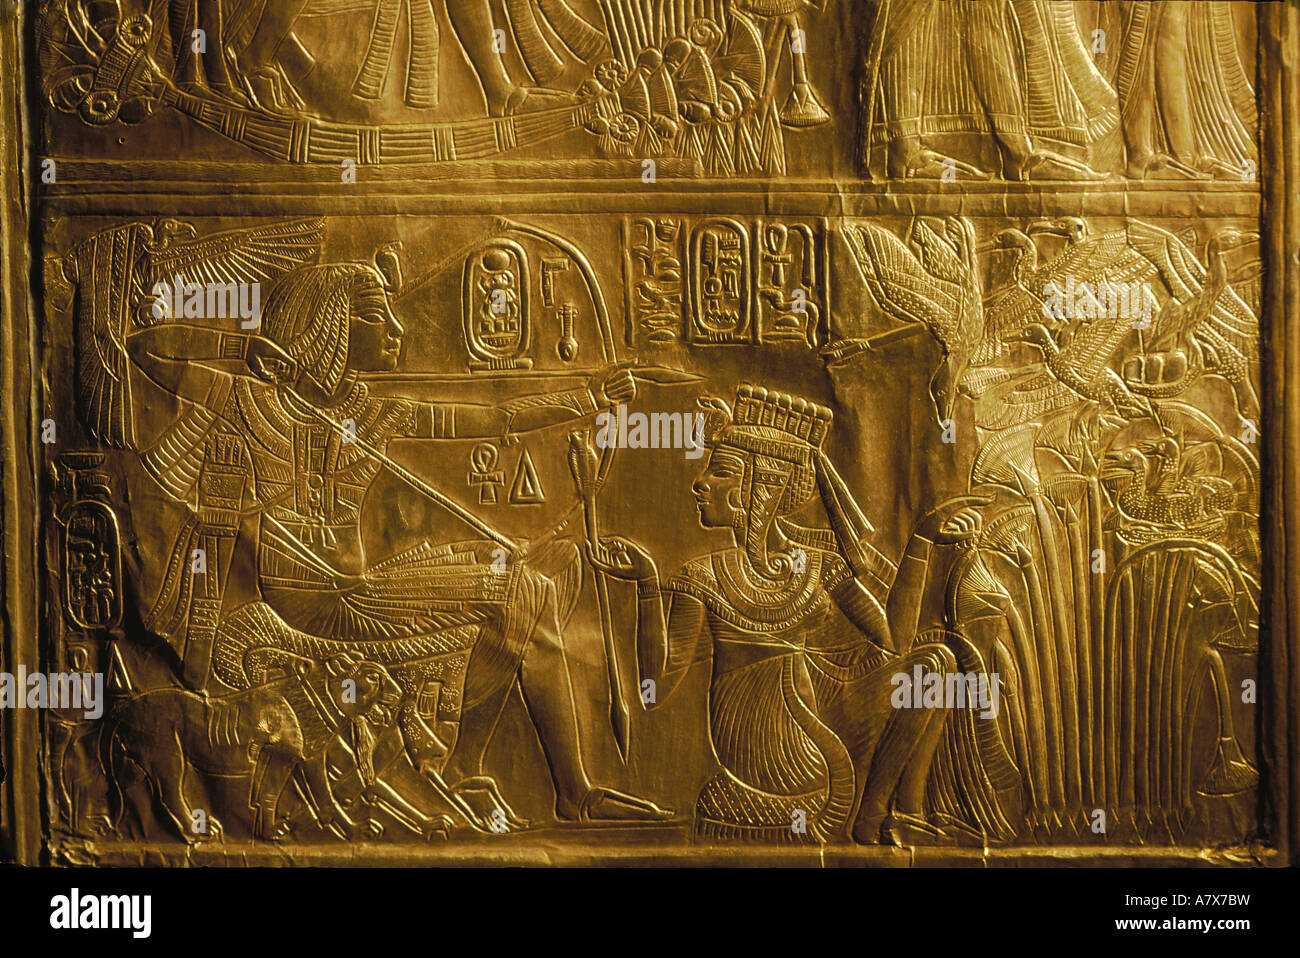 Краски древнего египта. Фараоны древнего Египта Тутанхамон. Гробница Тутанхамона рельефы. Гробница Тутанхамона. Золото древнего Египта.